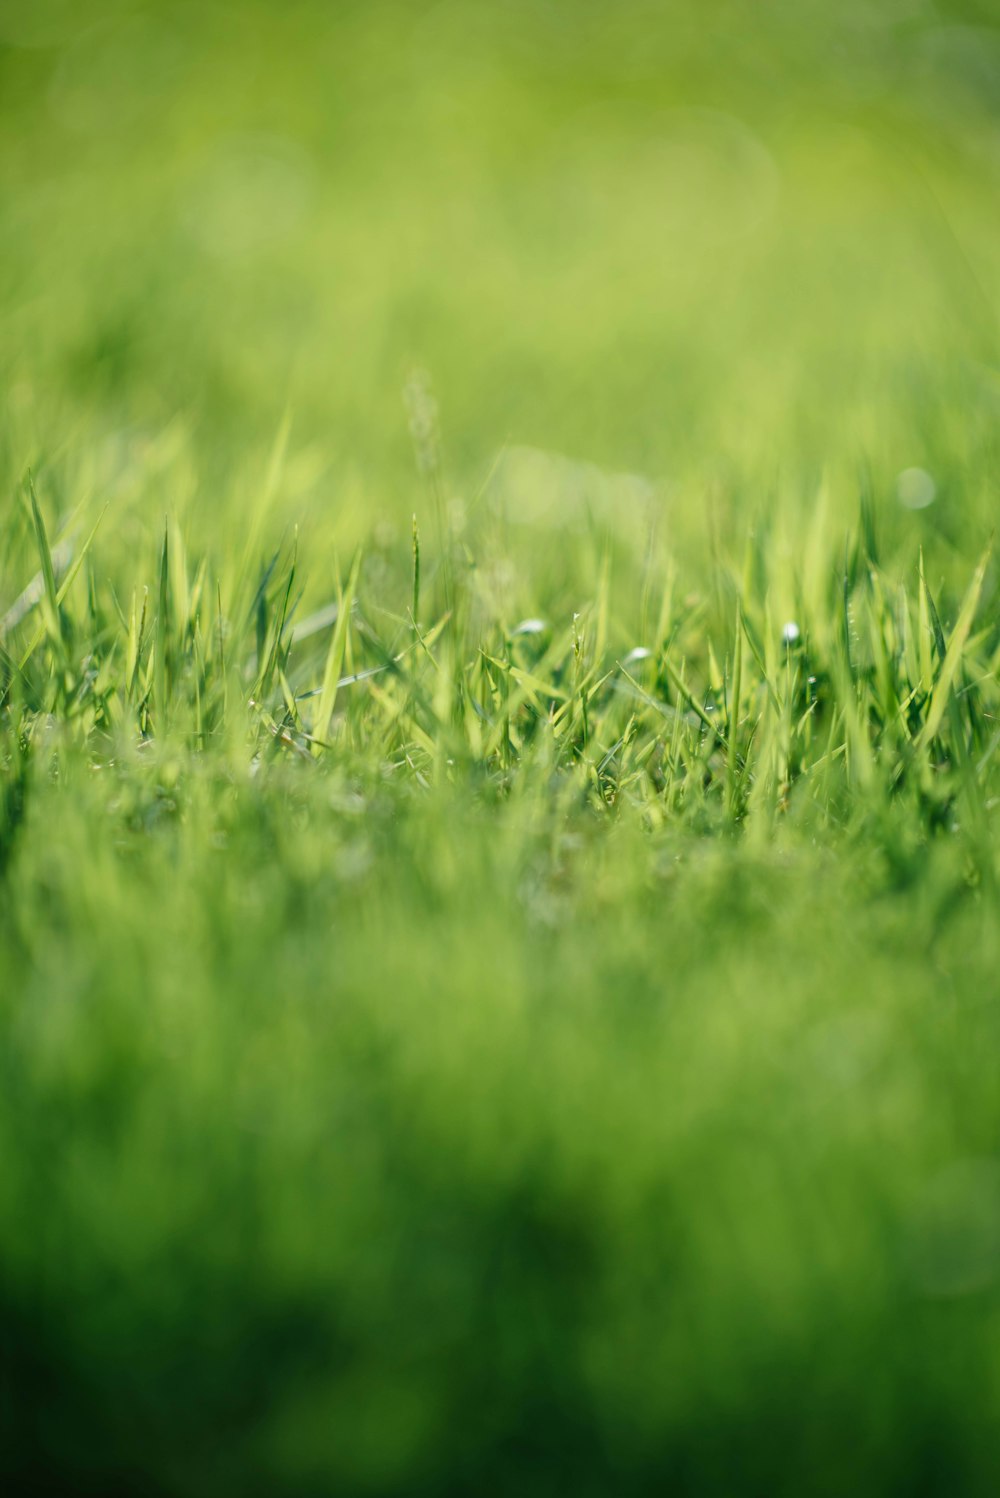 Green Grass During Daytime Photo Free Image On Unsplash